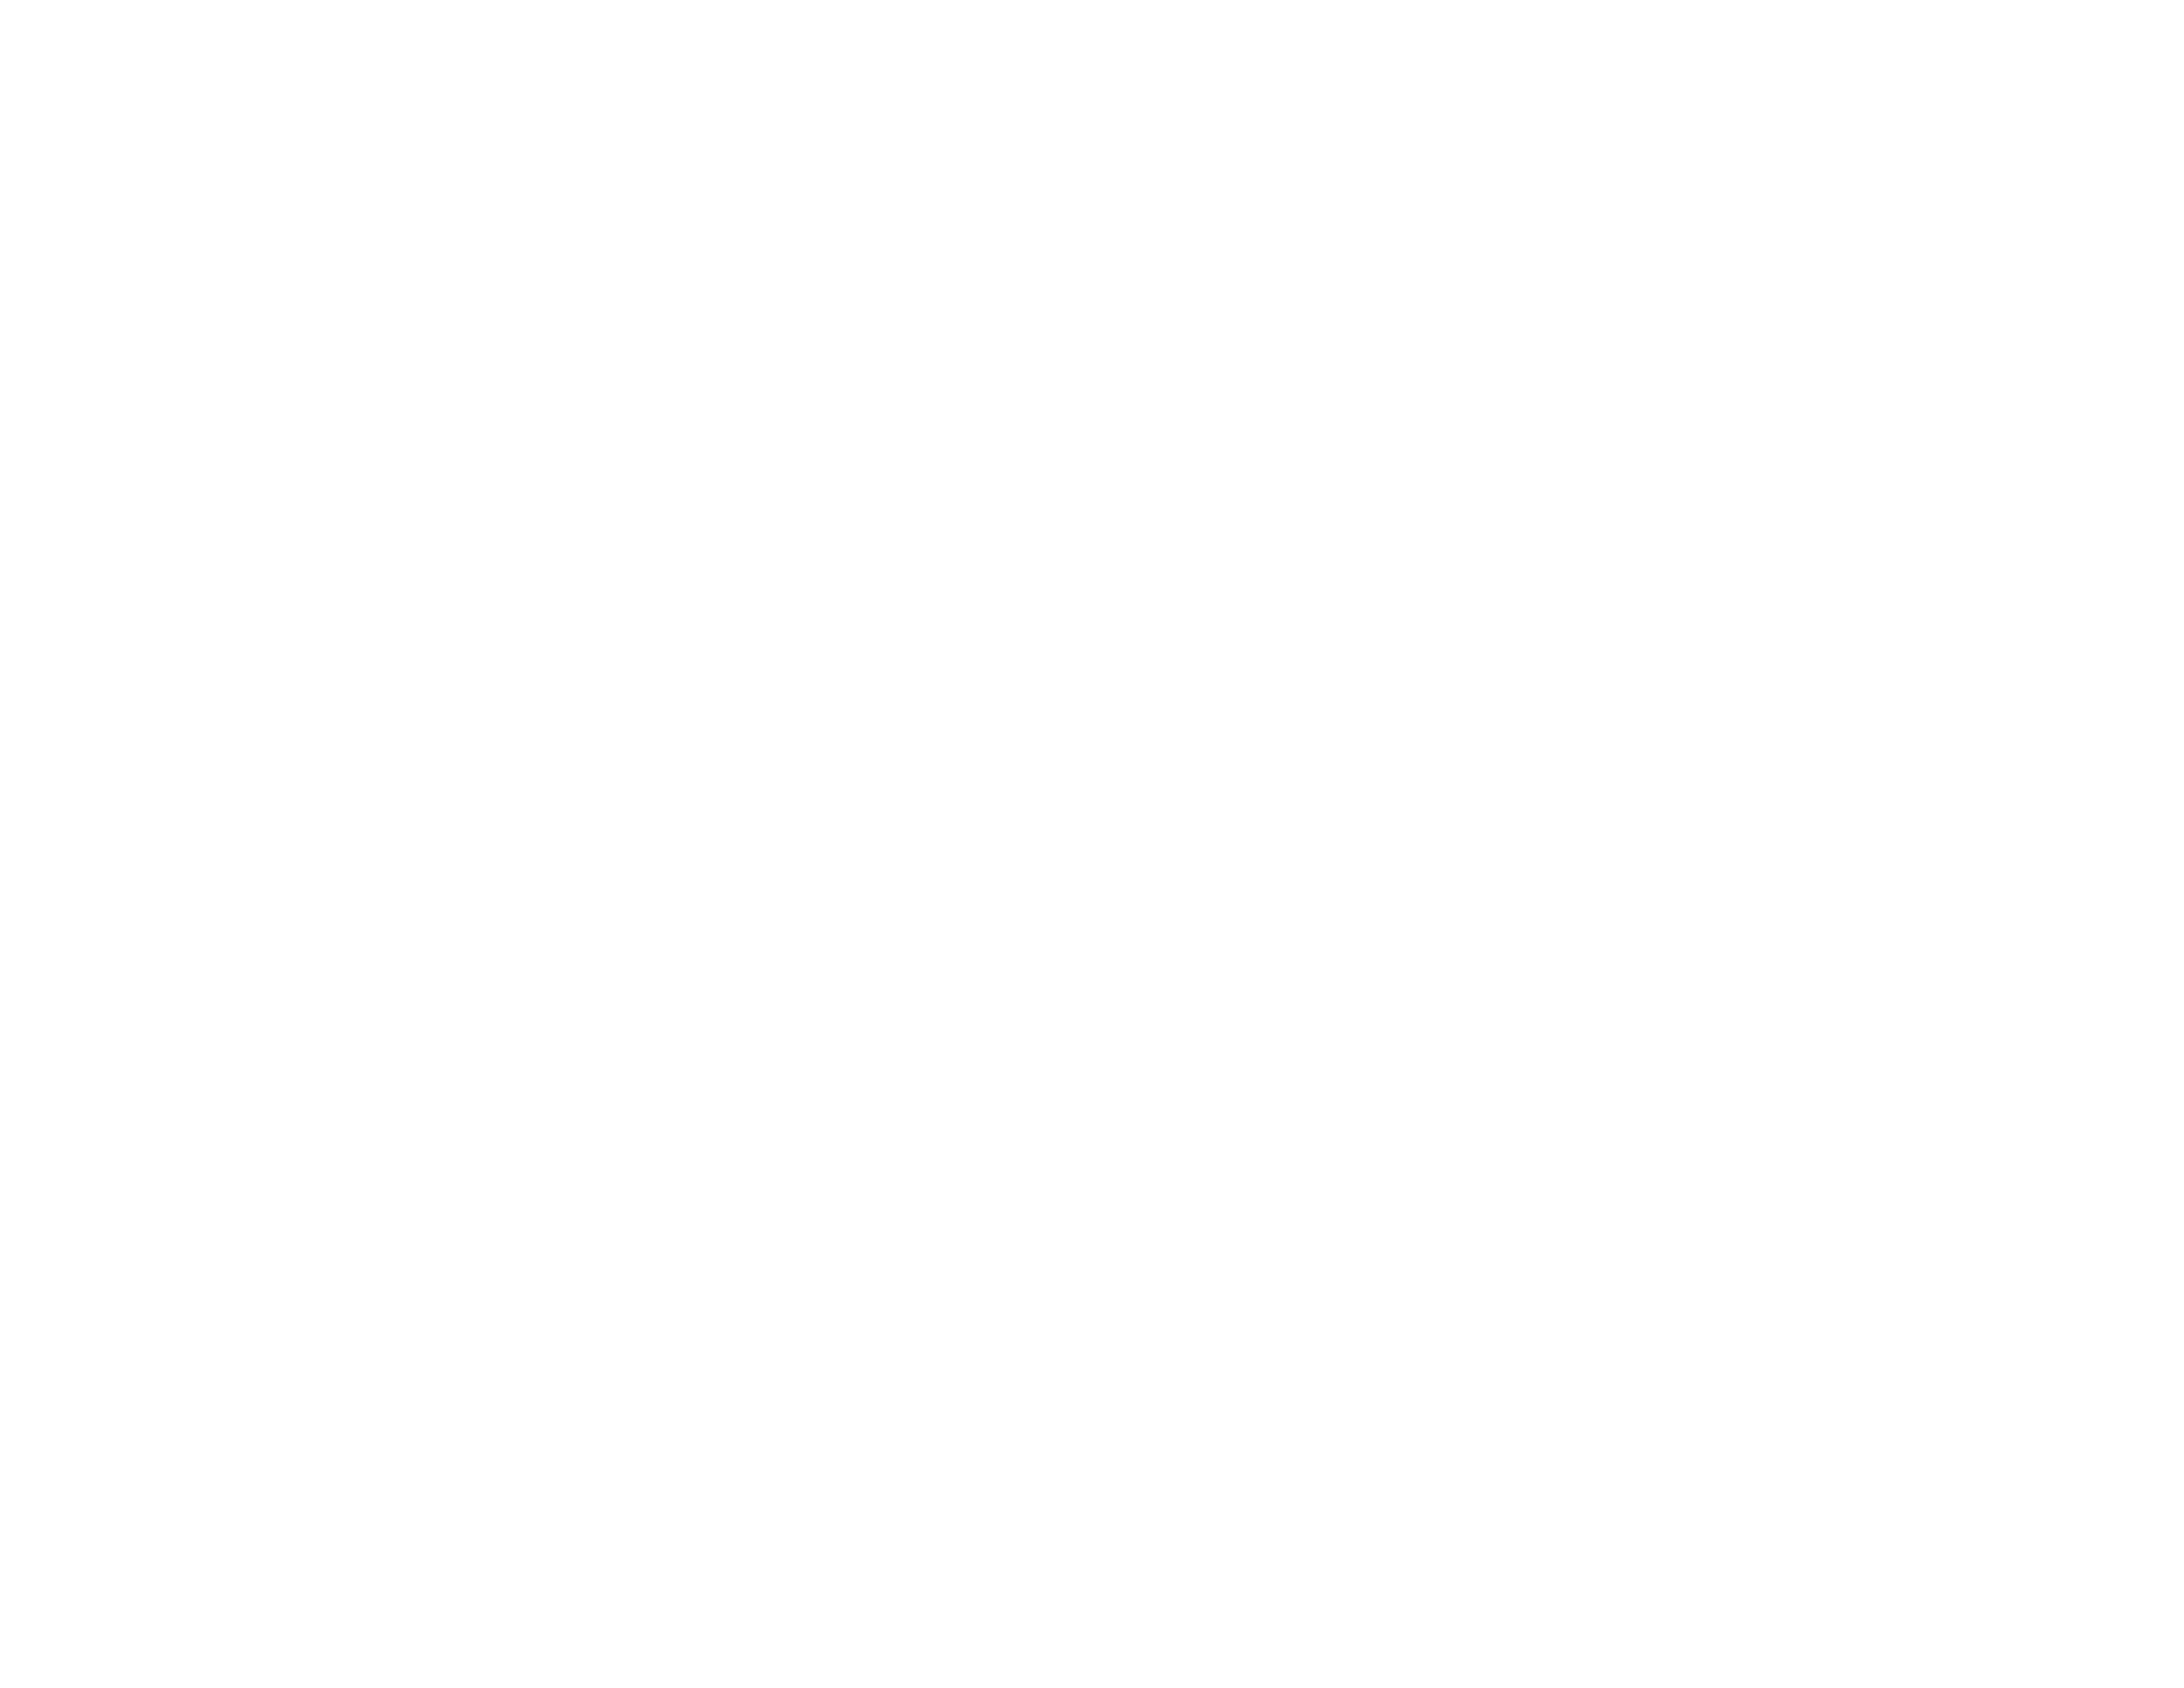 Stoney Brook Senior living logo